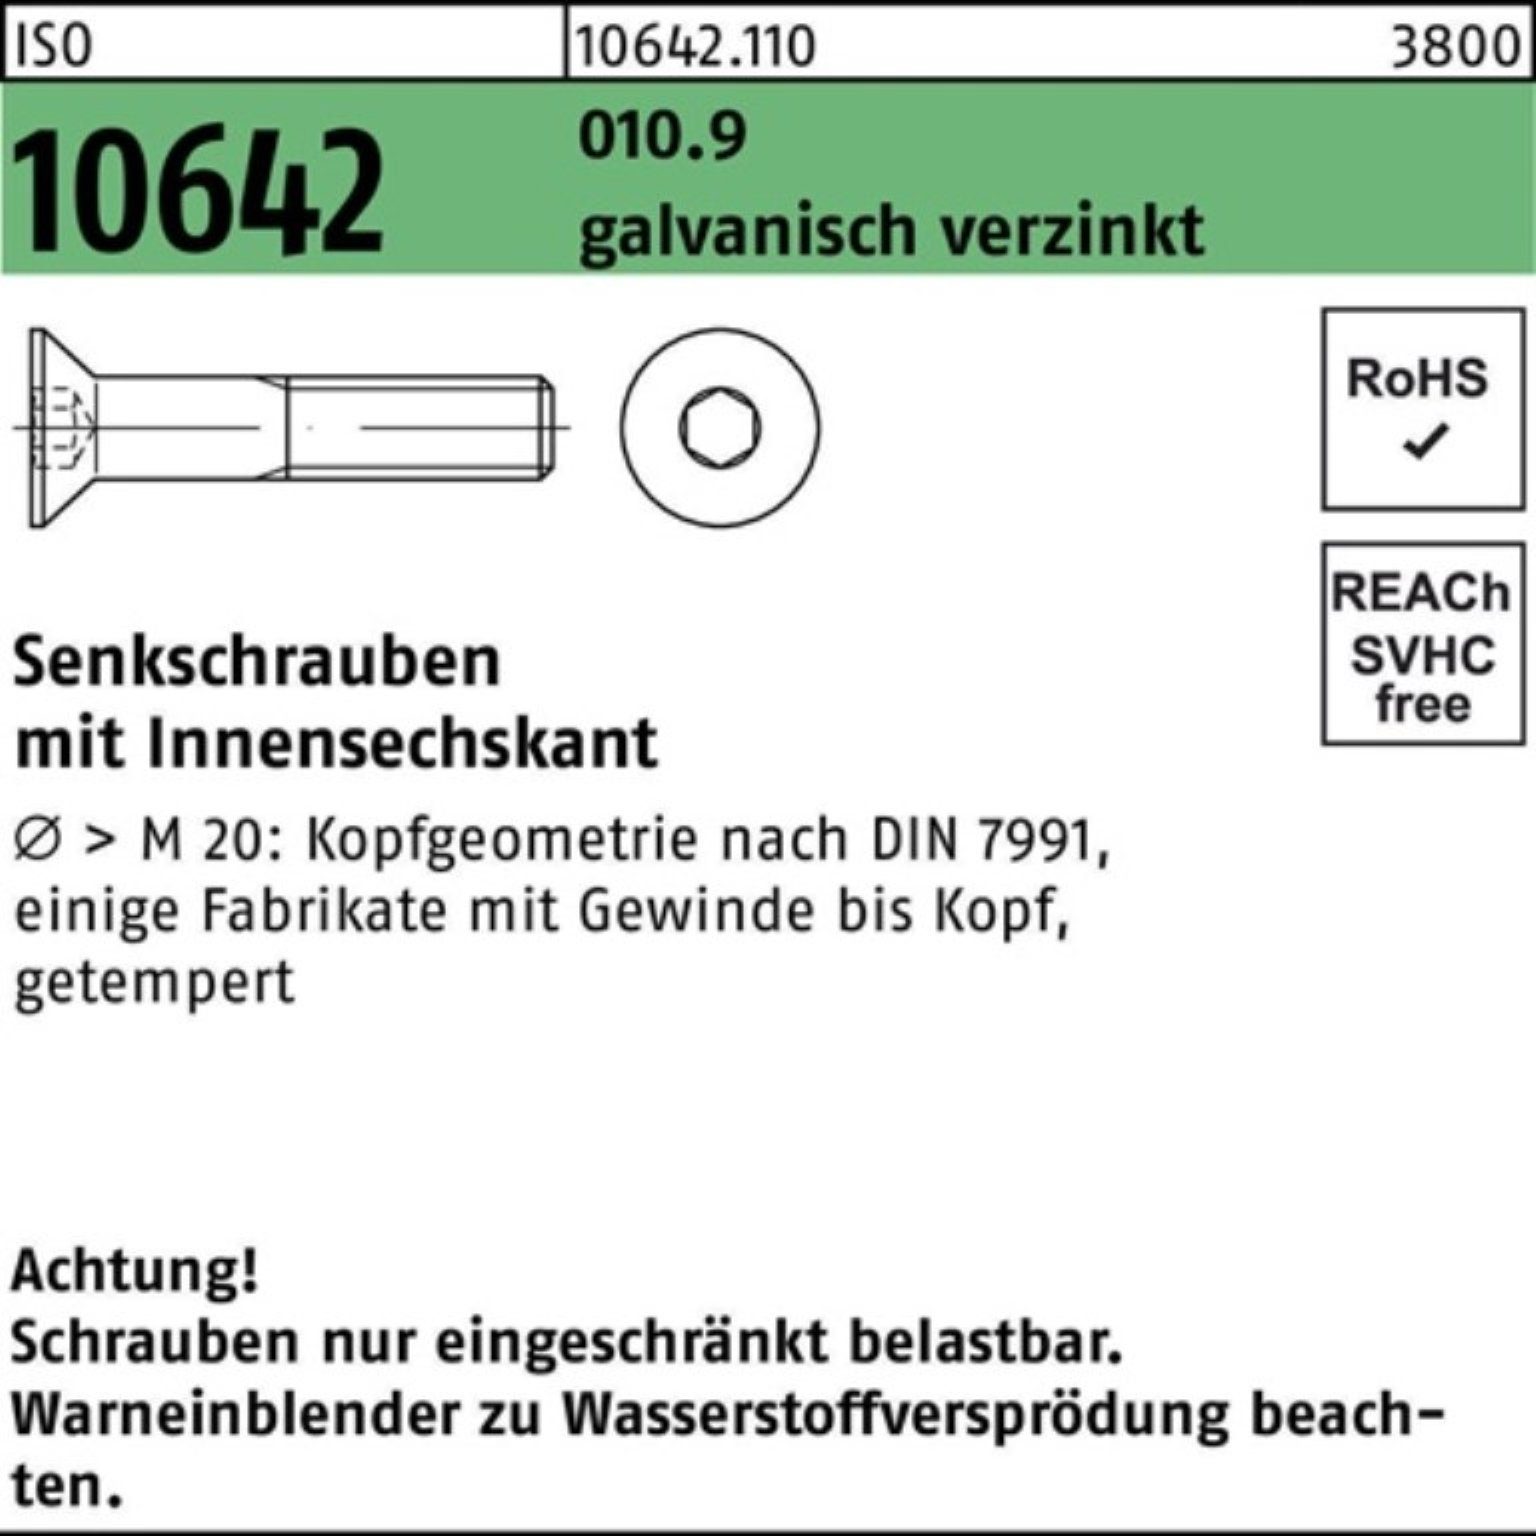 Reyher Senkschraube 200er galv.verz. 10642 ISO Innen-6kt 20 45 010.9 M8x Senkschraube Pack